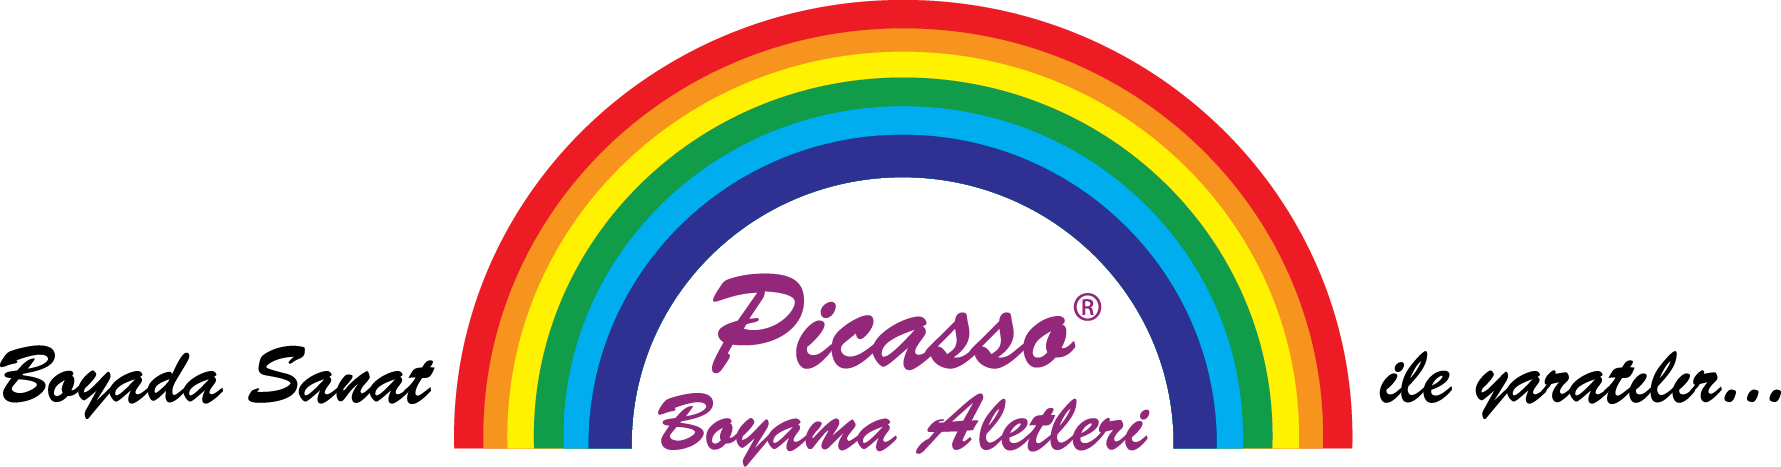 Picasso_Logo_boyada_sanat